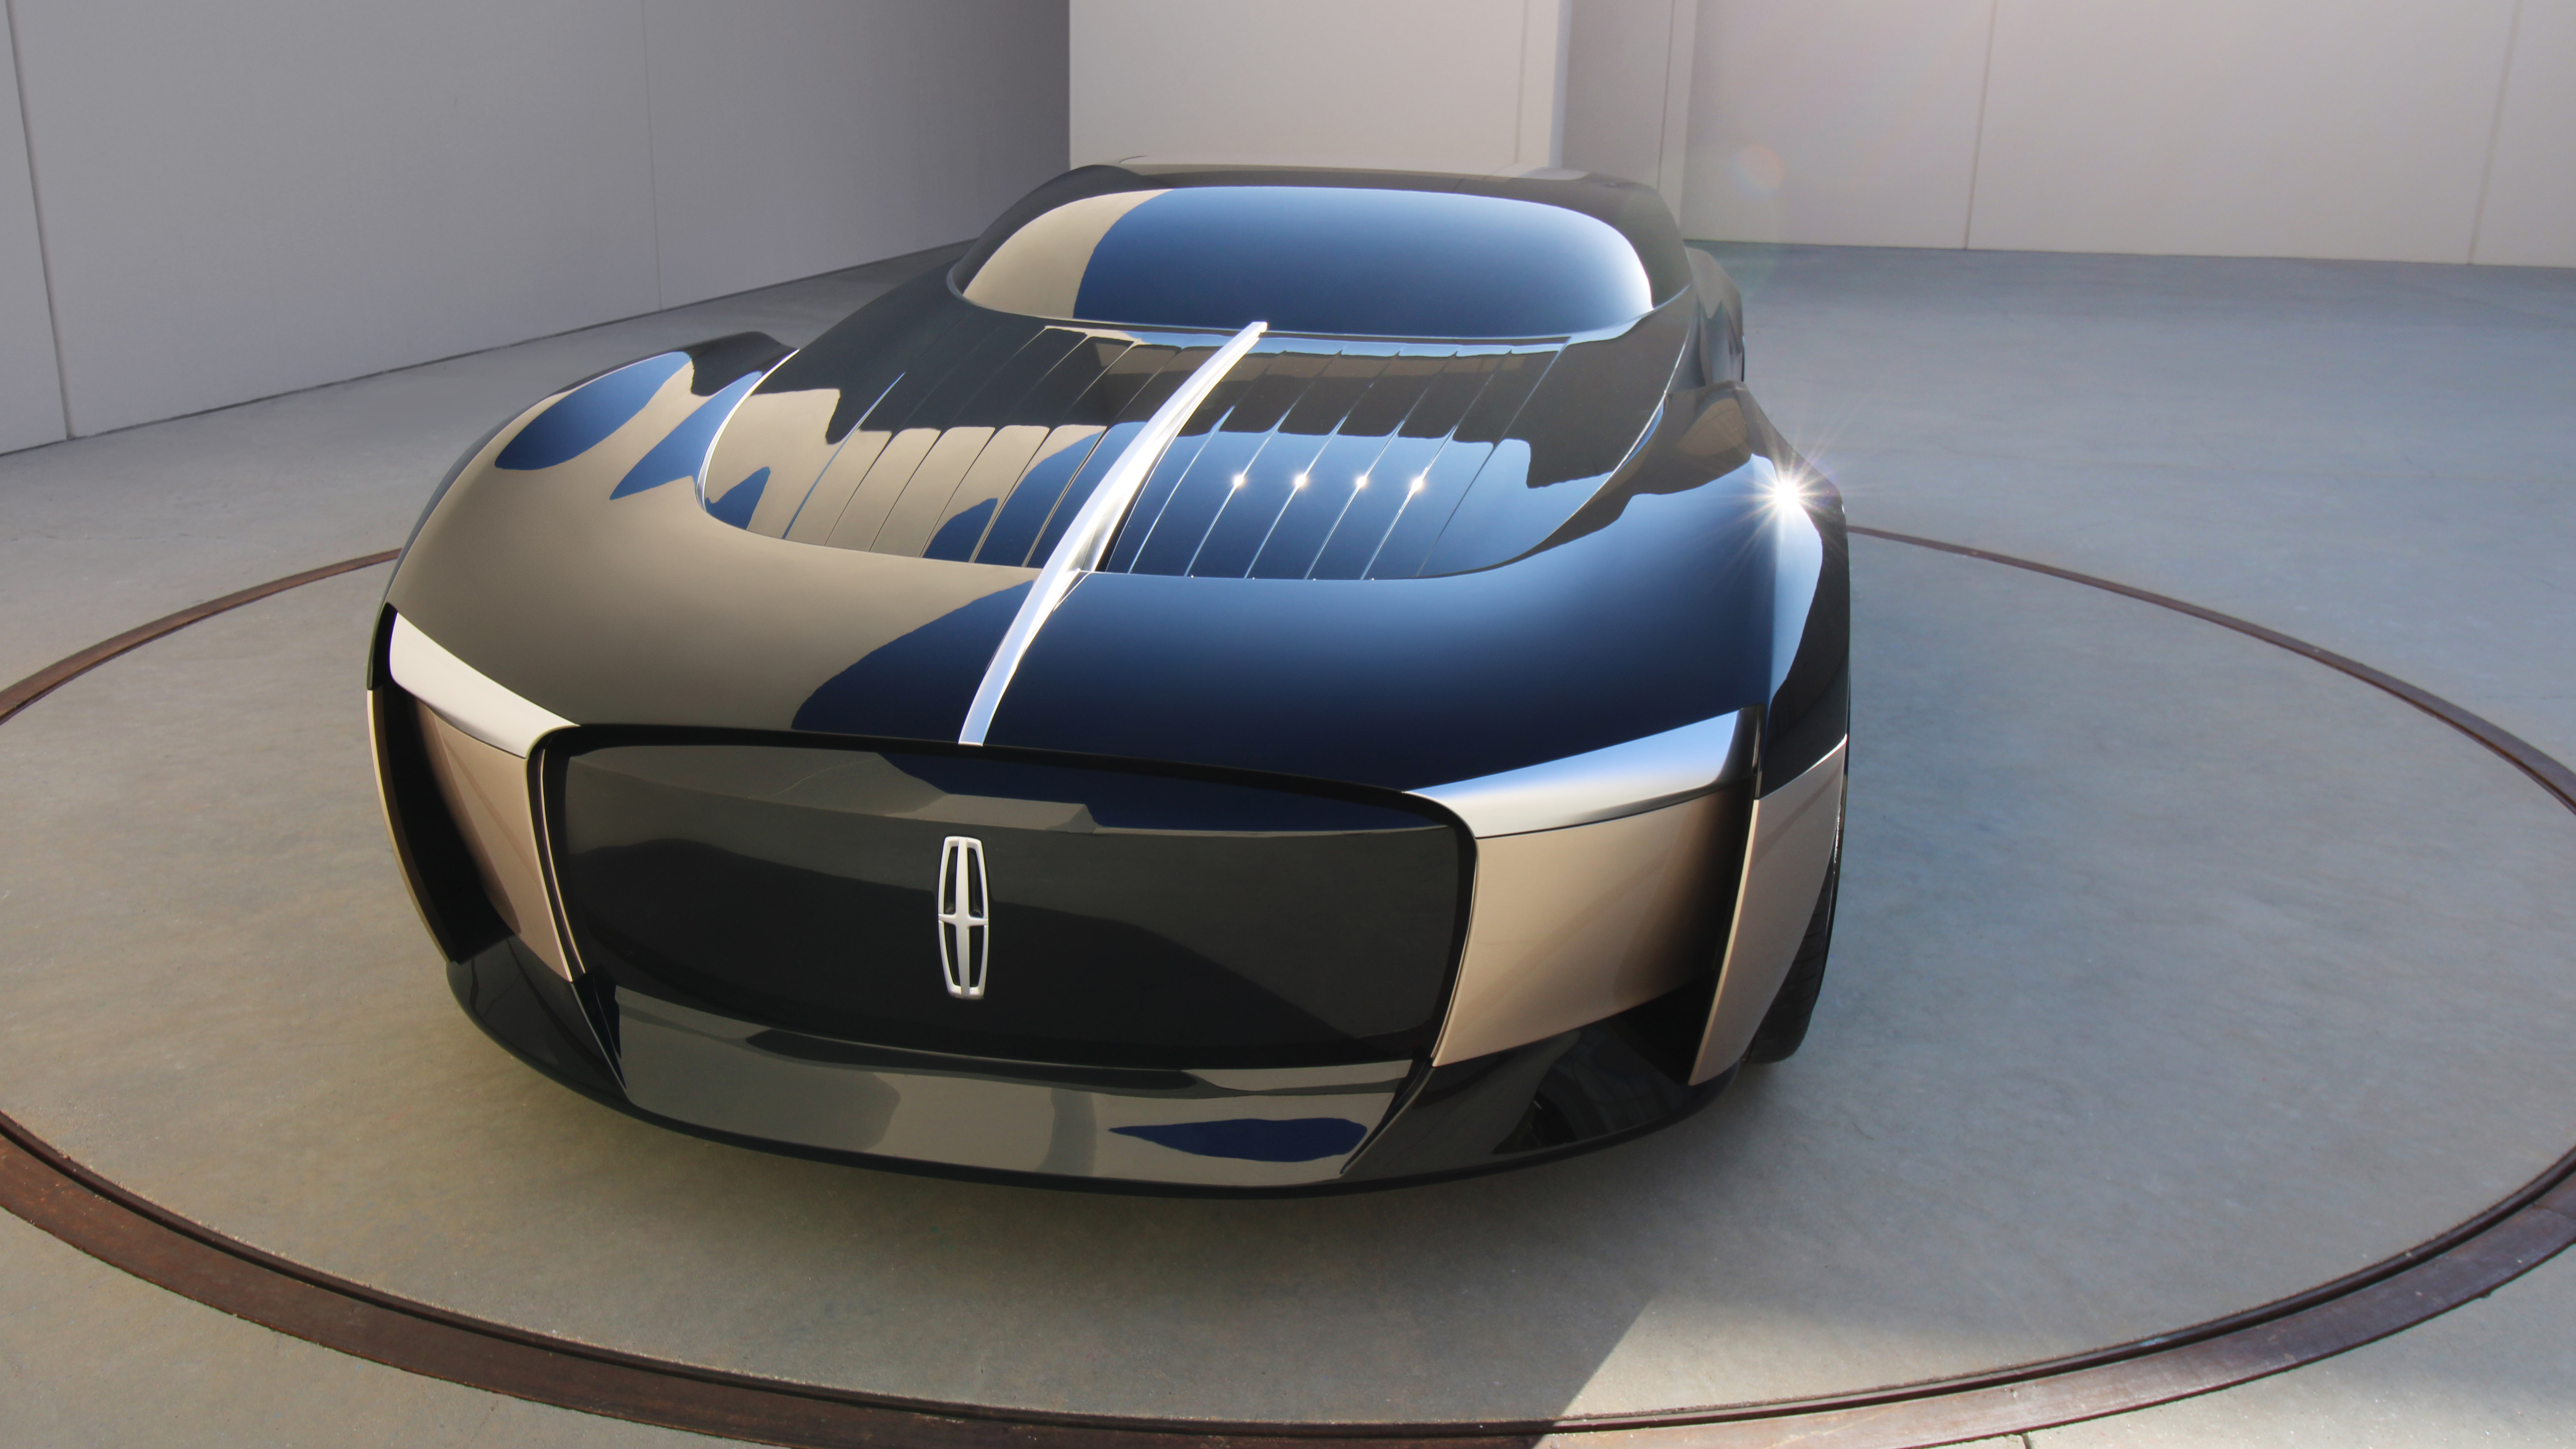 Zastaki.com - Автомобиль Lincoln Anniversary Concept 2021 года вид спереди